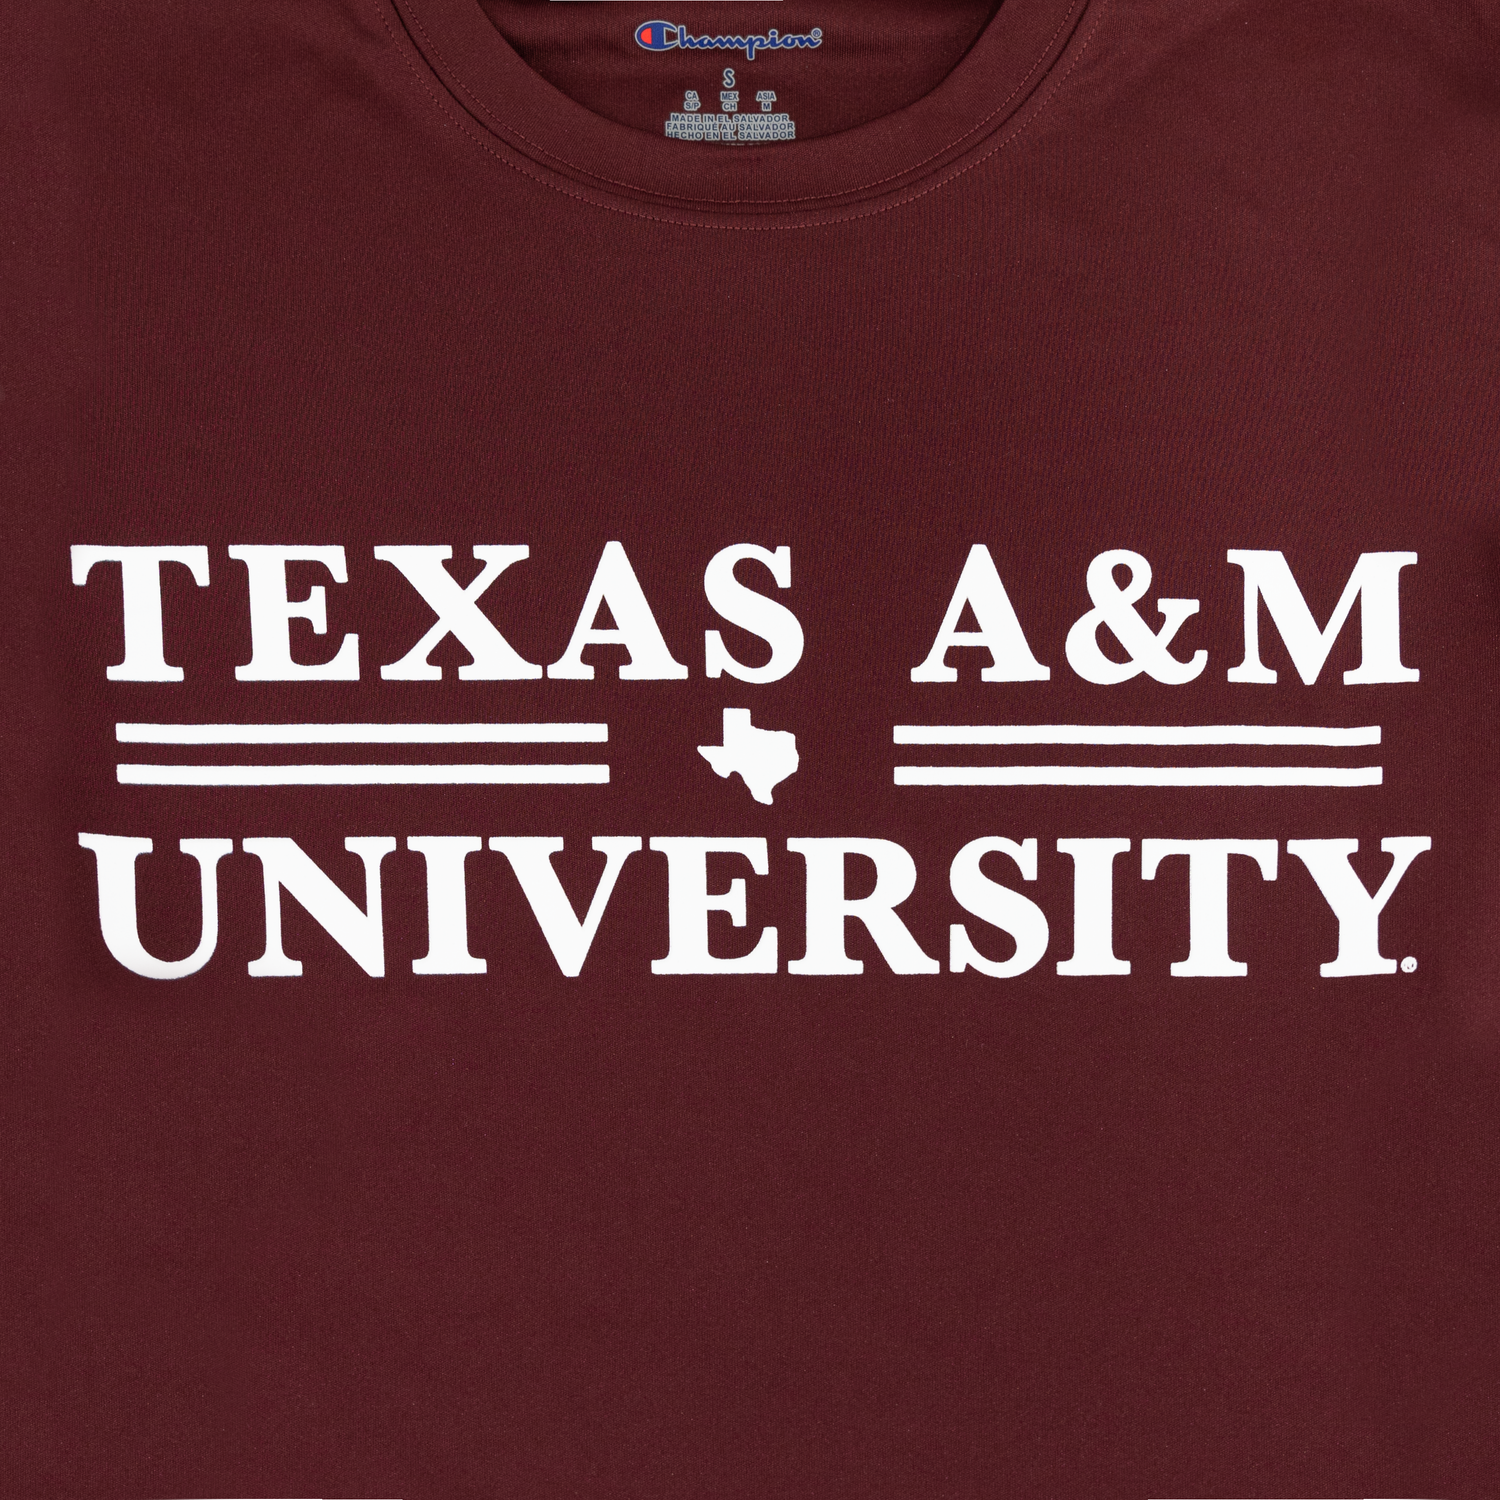 Texas A&M University Champion Athletic Tee